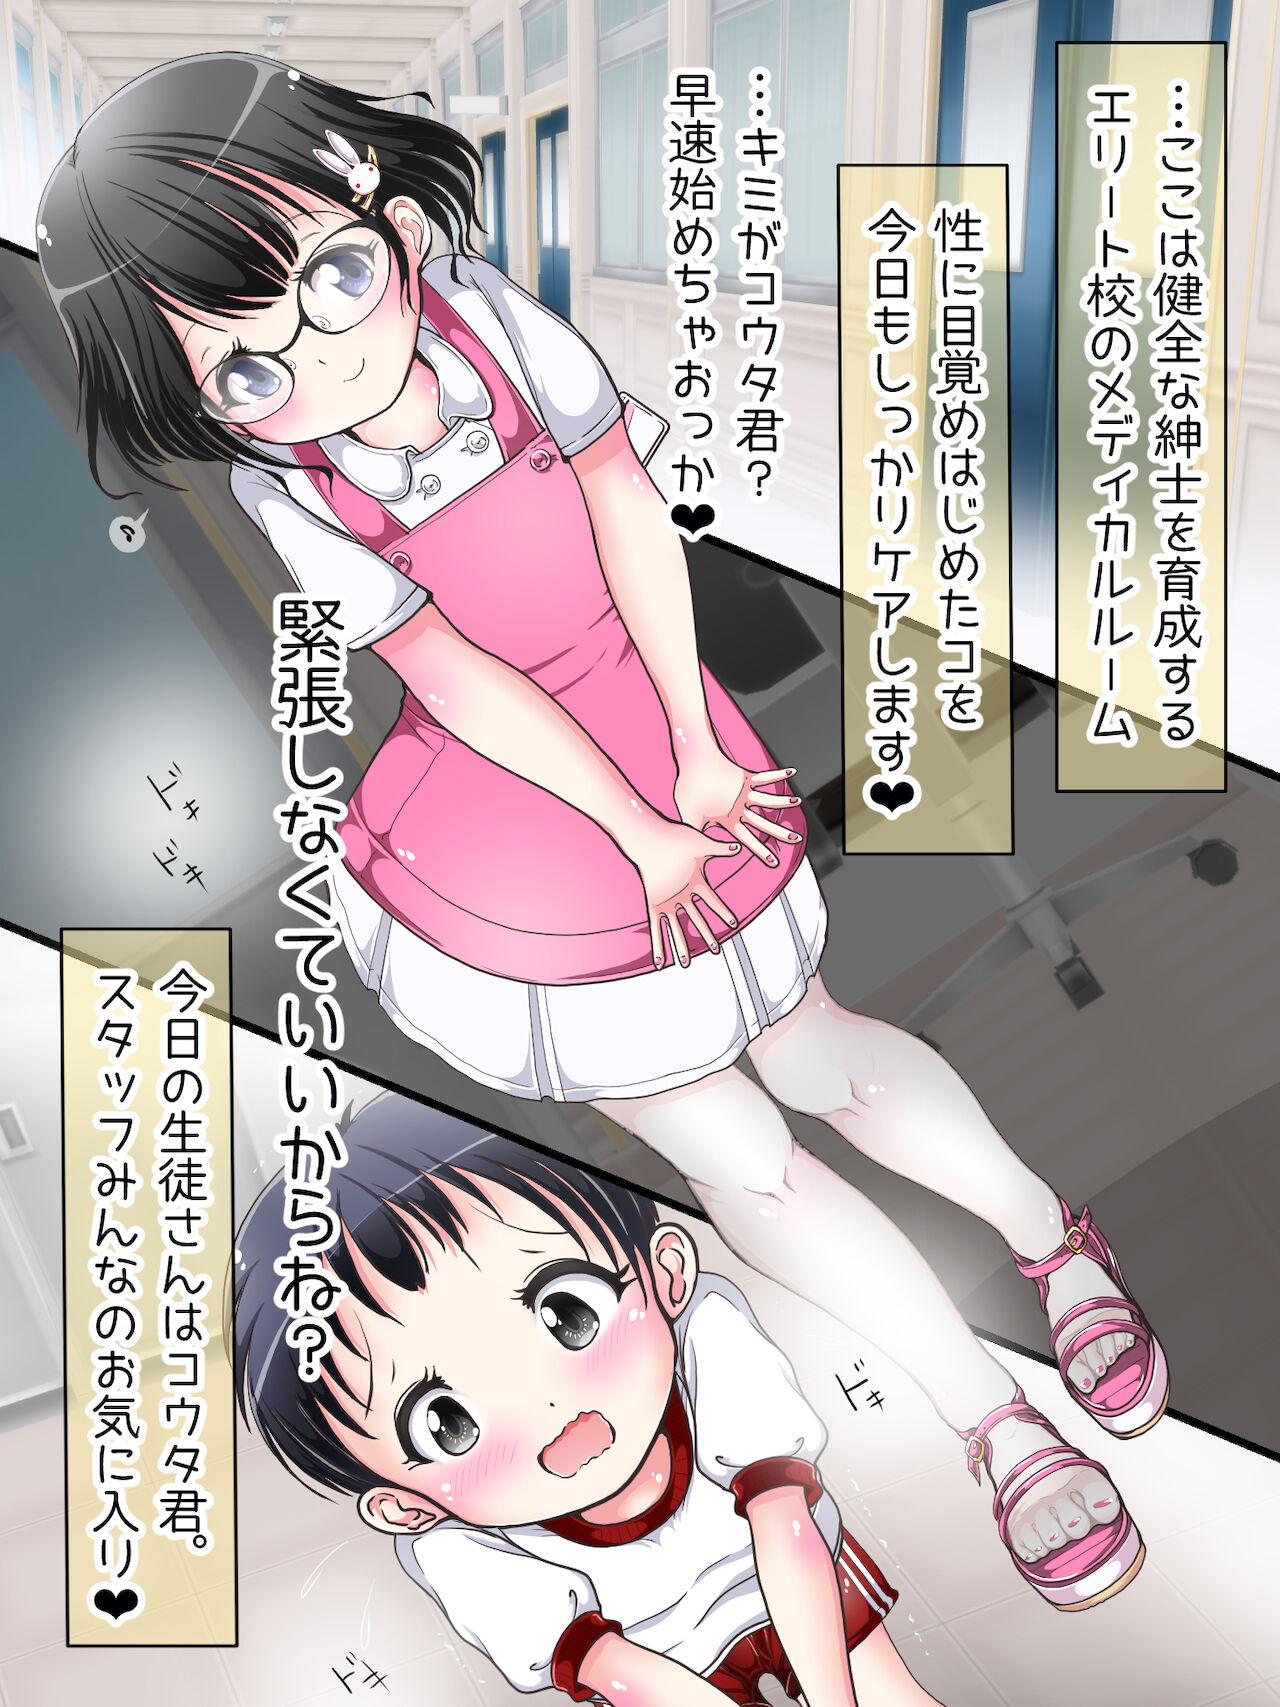 [Oneashi] One-Shota Footjob Lessons: Foot-Stroked by Nurses 1